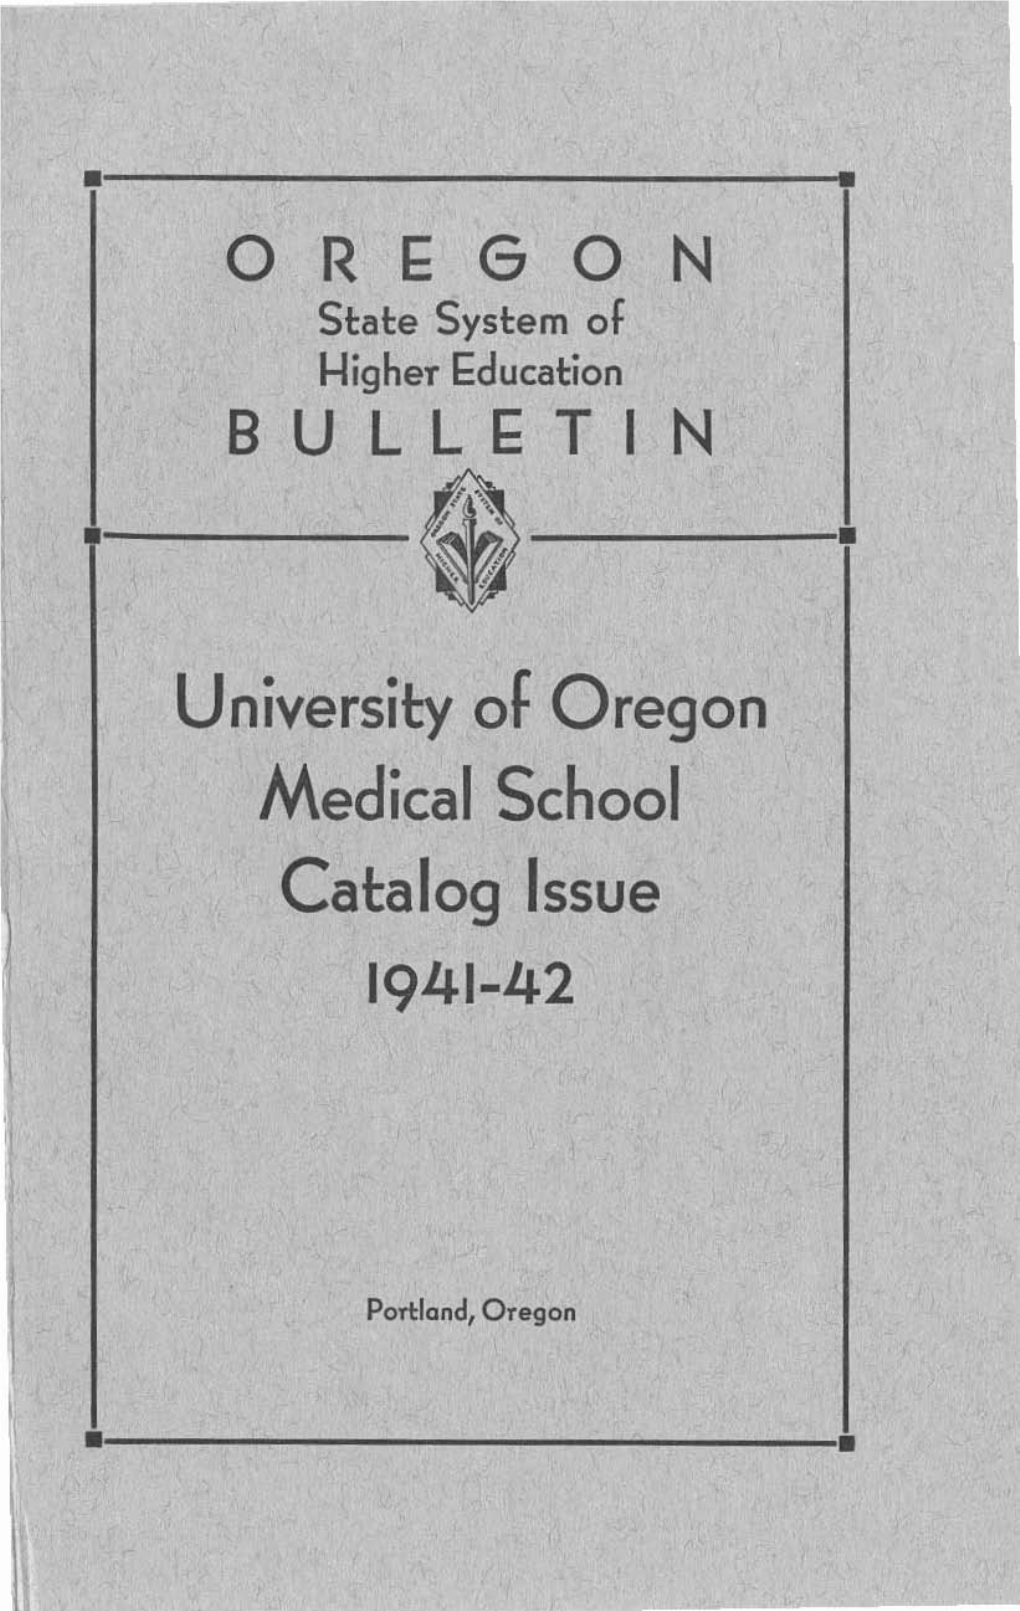 University of Oregon Medical School Catalog Issue 1941-42